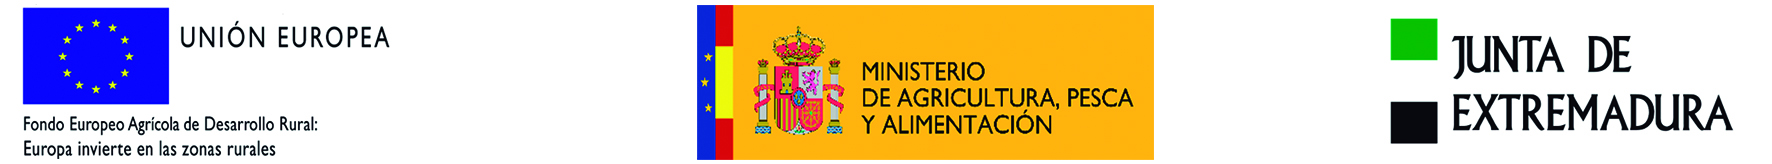 UNION EUROPEA - MINISTERIO DE AGRICULTURA - JUNTA DE EXTREMADURA